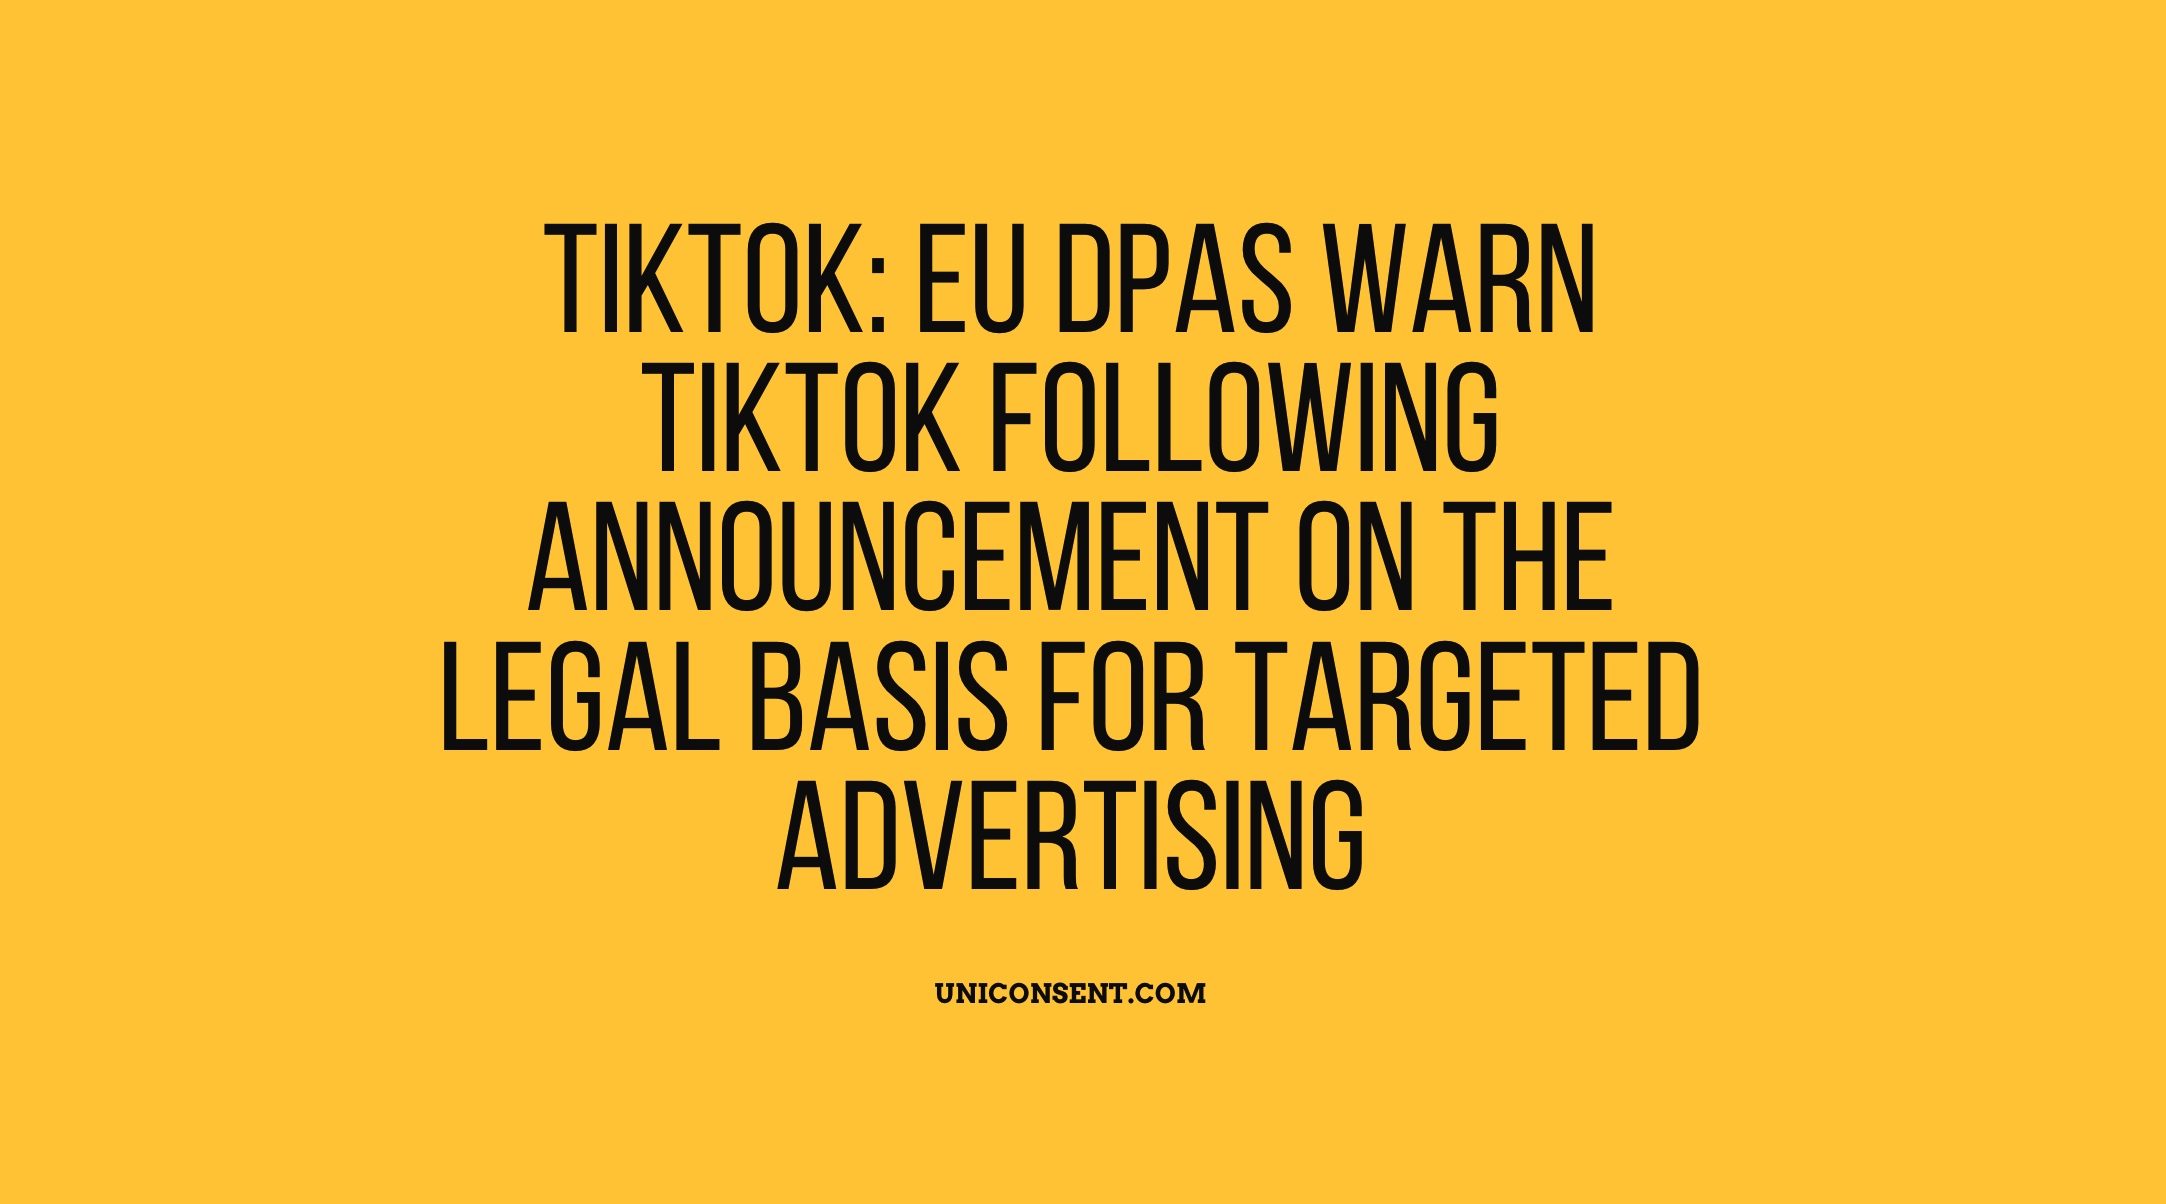 TikTok在欧洲面临有关儿童安全和隐私投诉的新一轮监管投诉